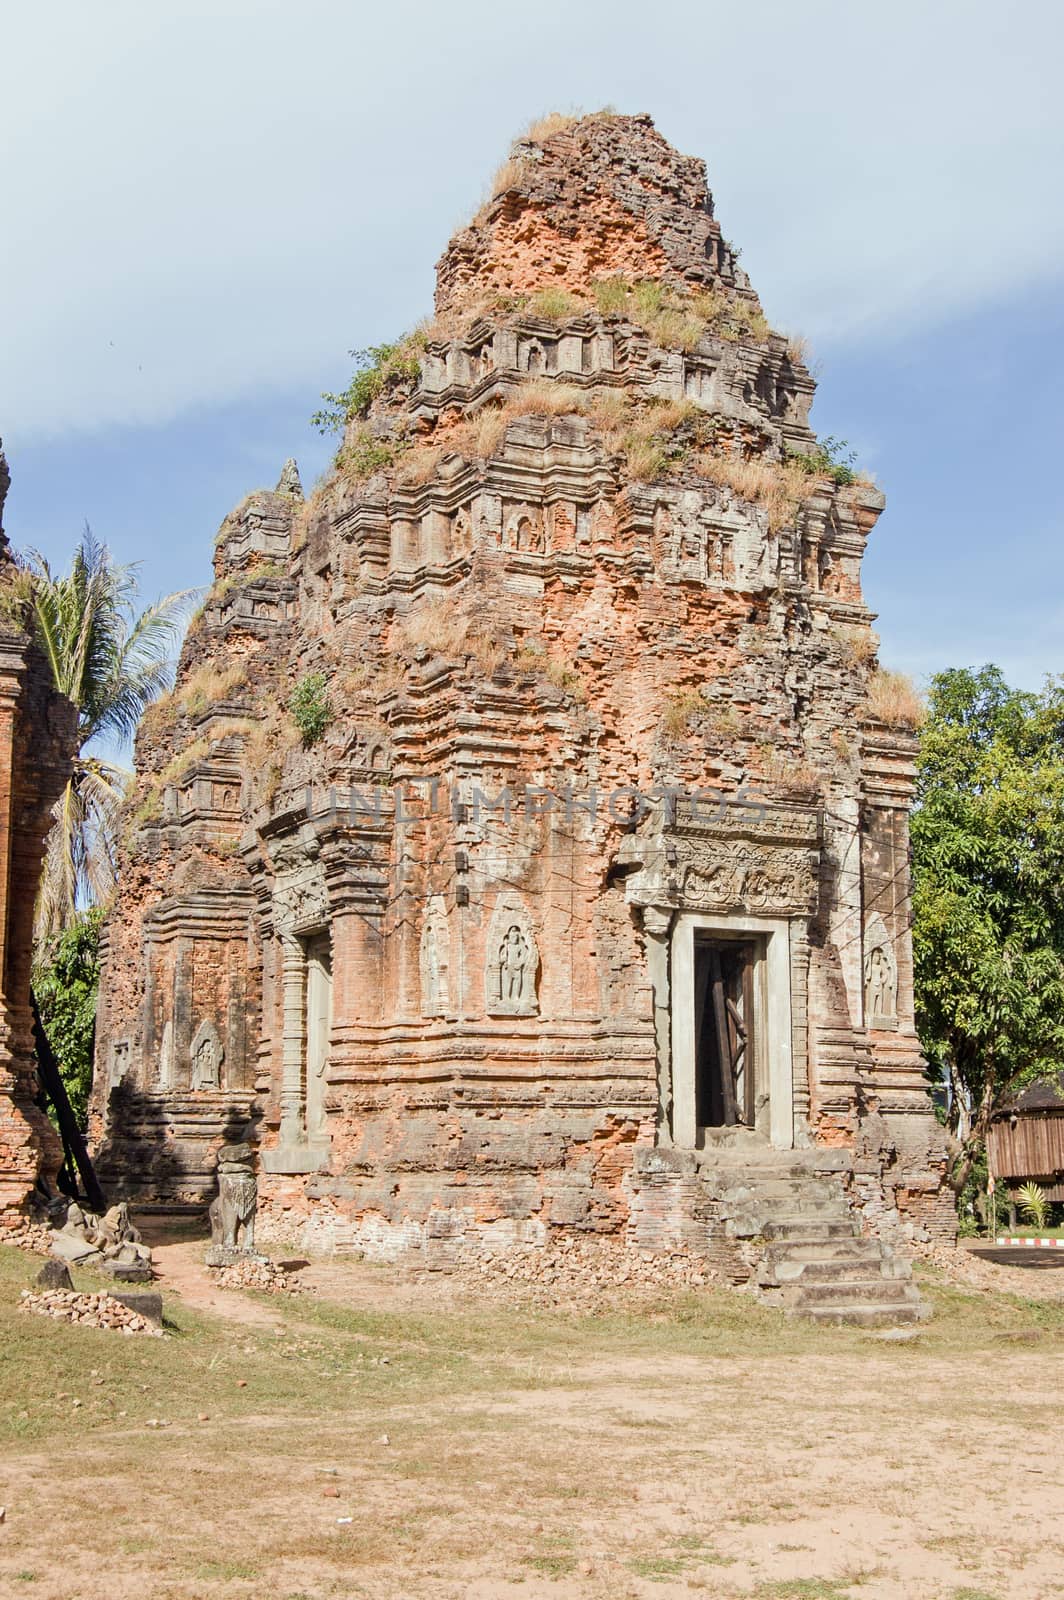 Lolei Temple complex, Angkor, Cambodia by BasPhoto